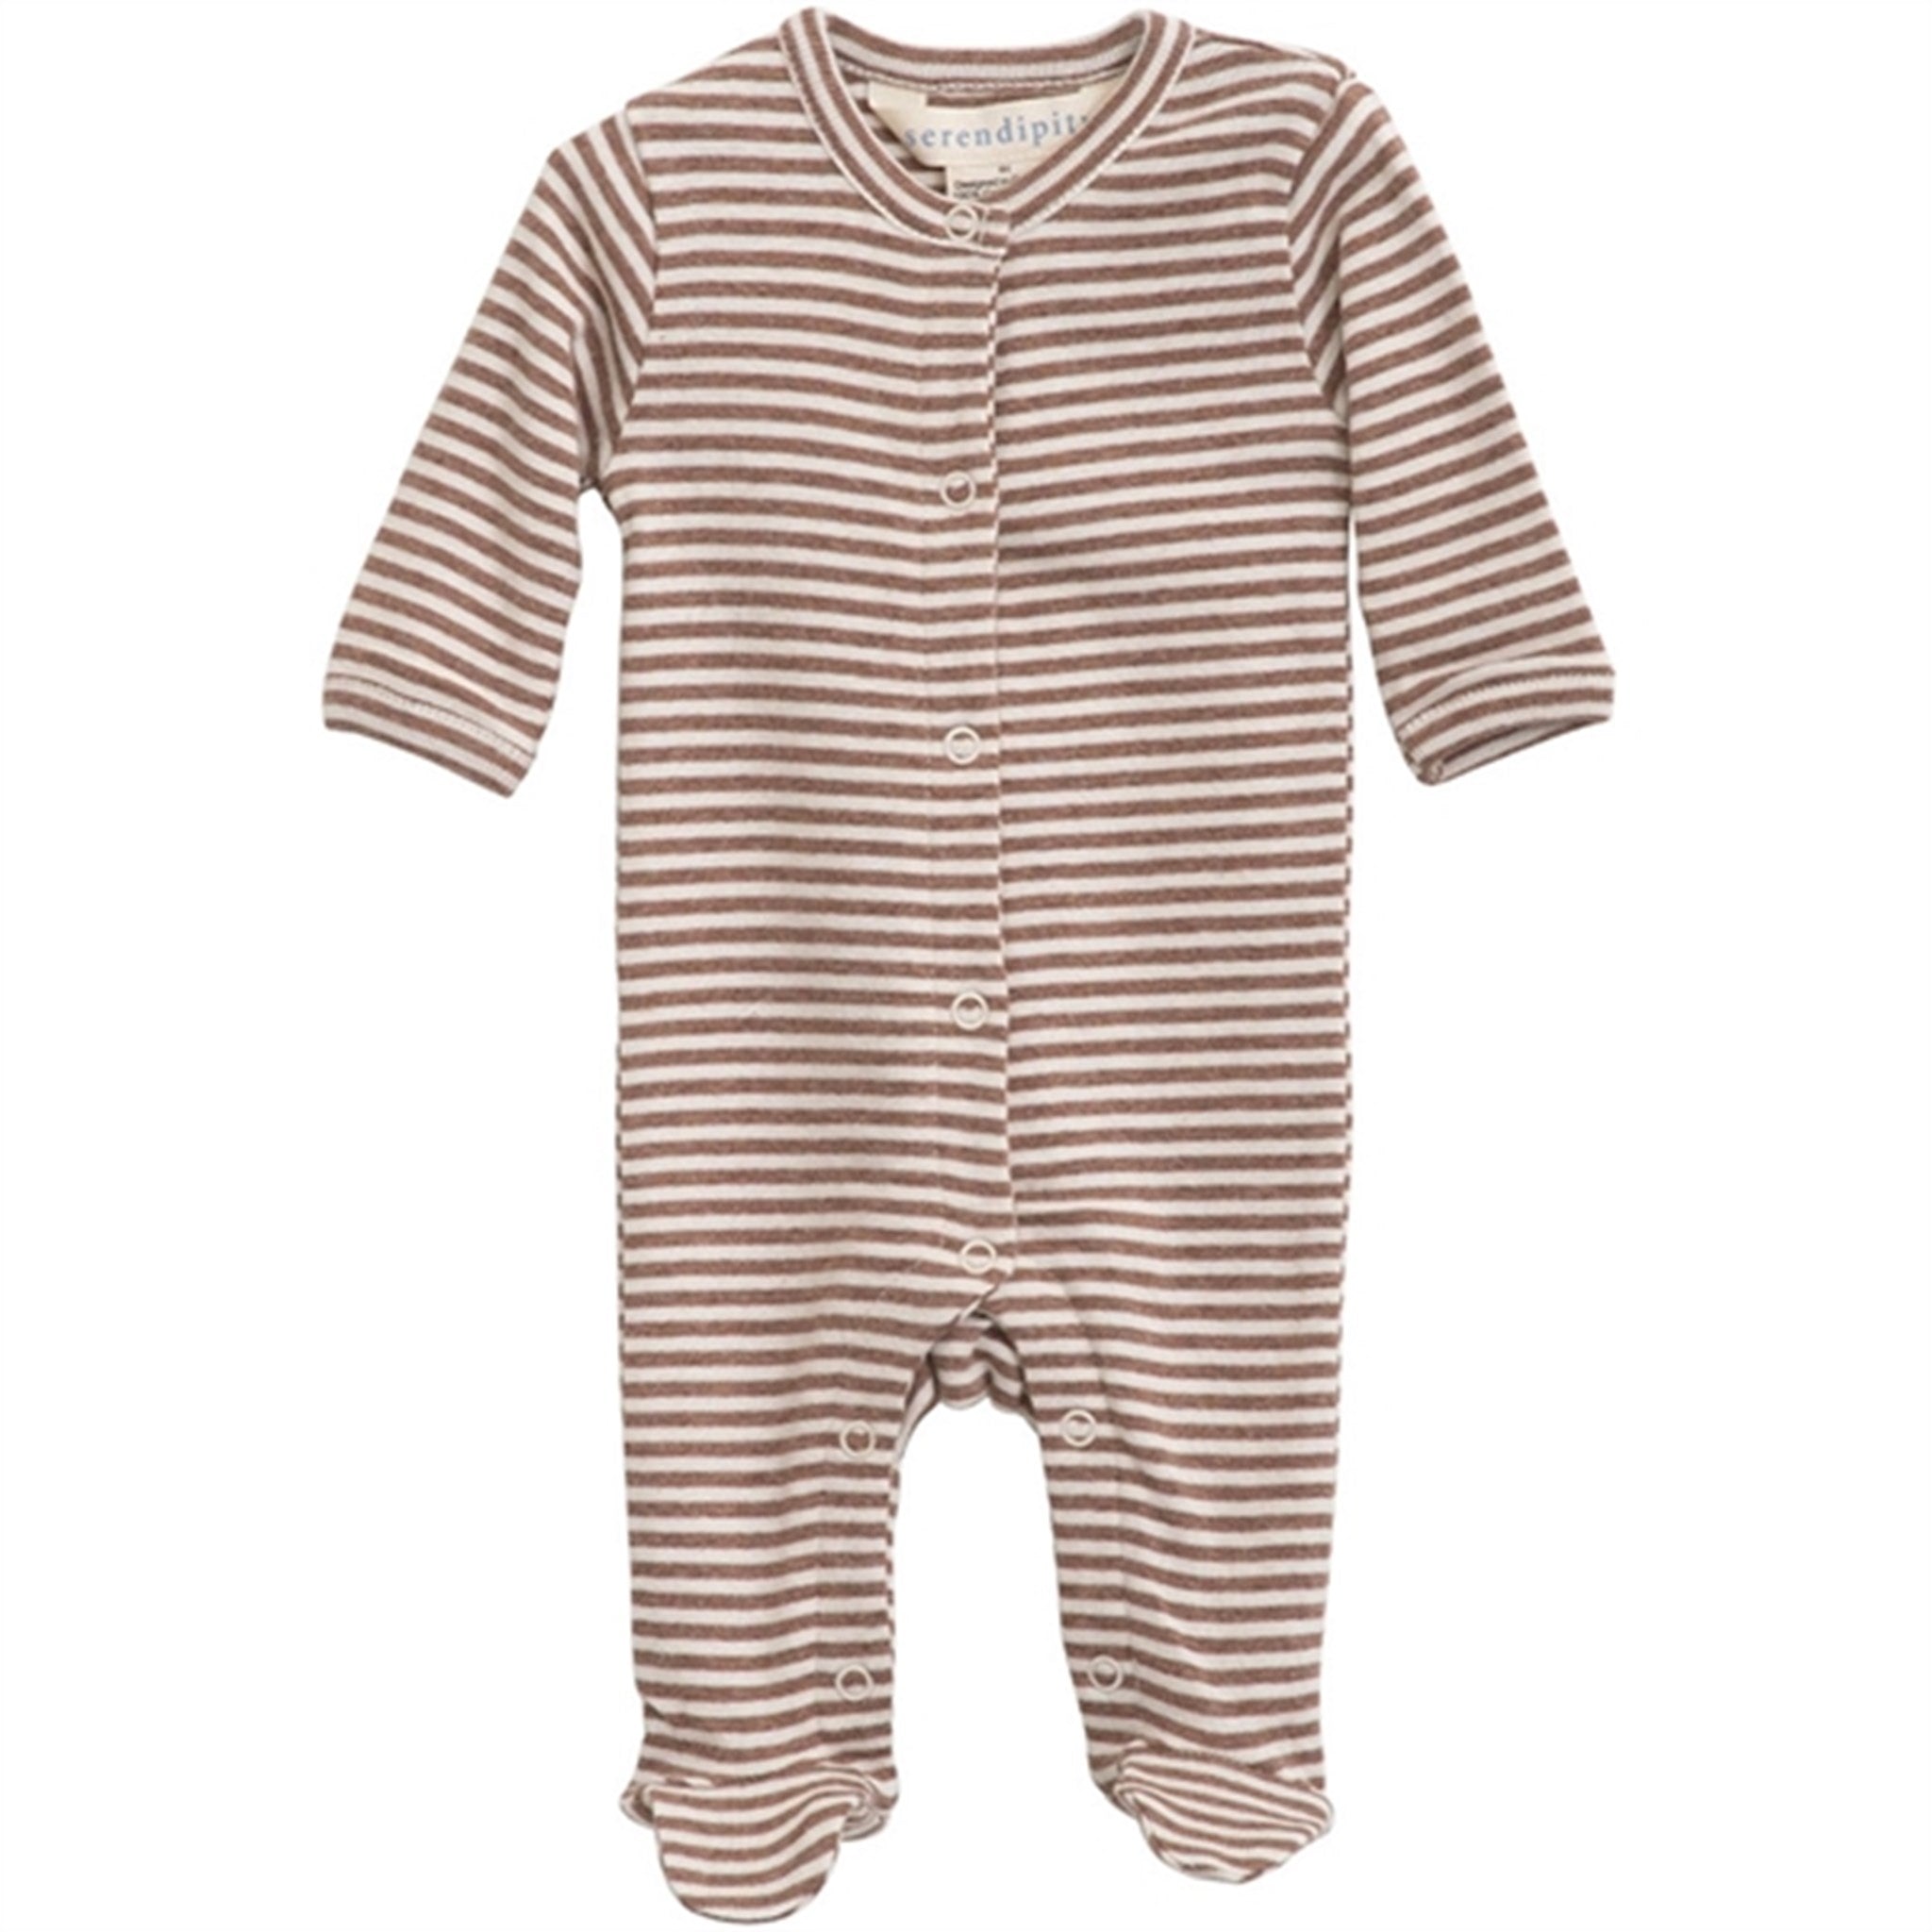 Serendipity Newborn Acorn/Offwhite Stripe Suit w. Feet 2